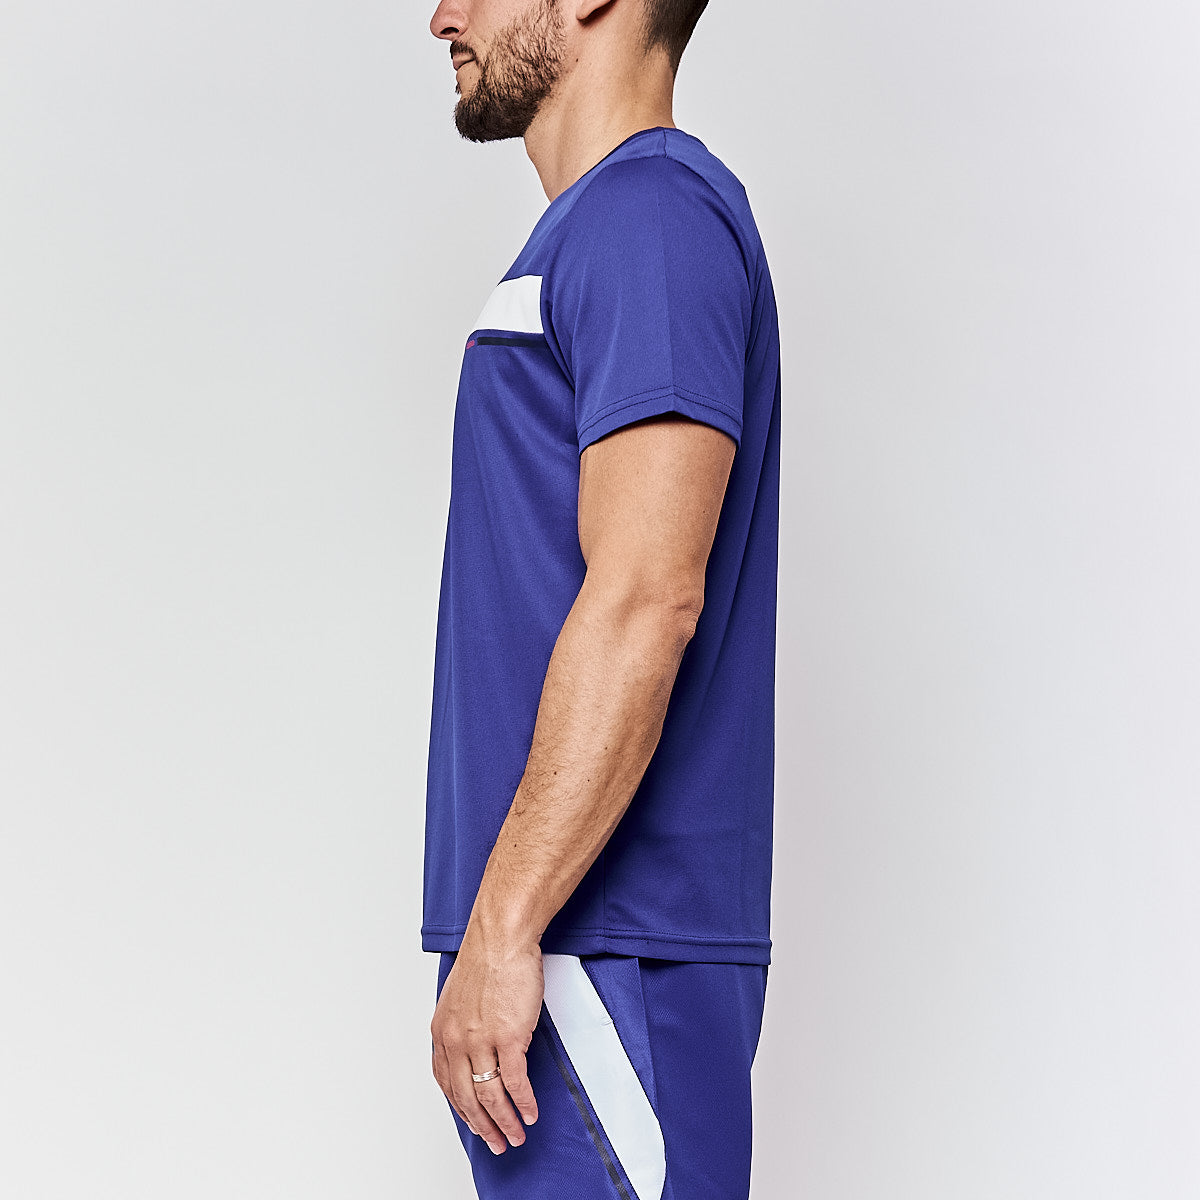 T-shirt homme Avellino Sportswear Bleu